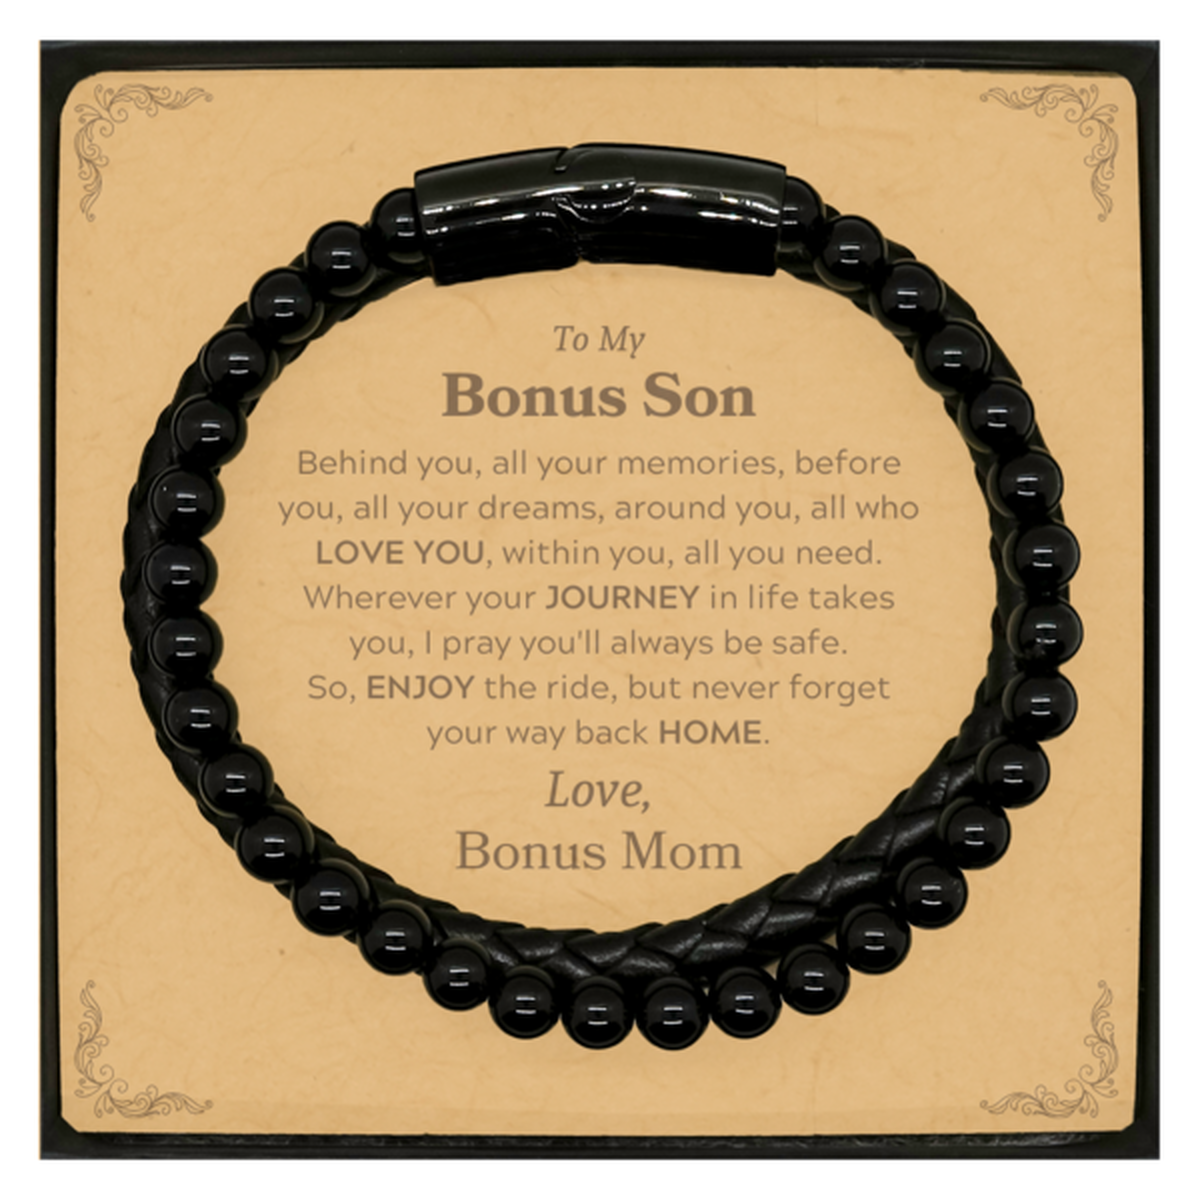 To My Bonus Son Graduation Gifts from Bonus Mom, Bonus Son Stone Leather Bracelets Christmas Birthday Gifts for Bonus Son Behind you, all your memories, before you, all your dreams. Love, Bonus Mom